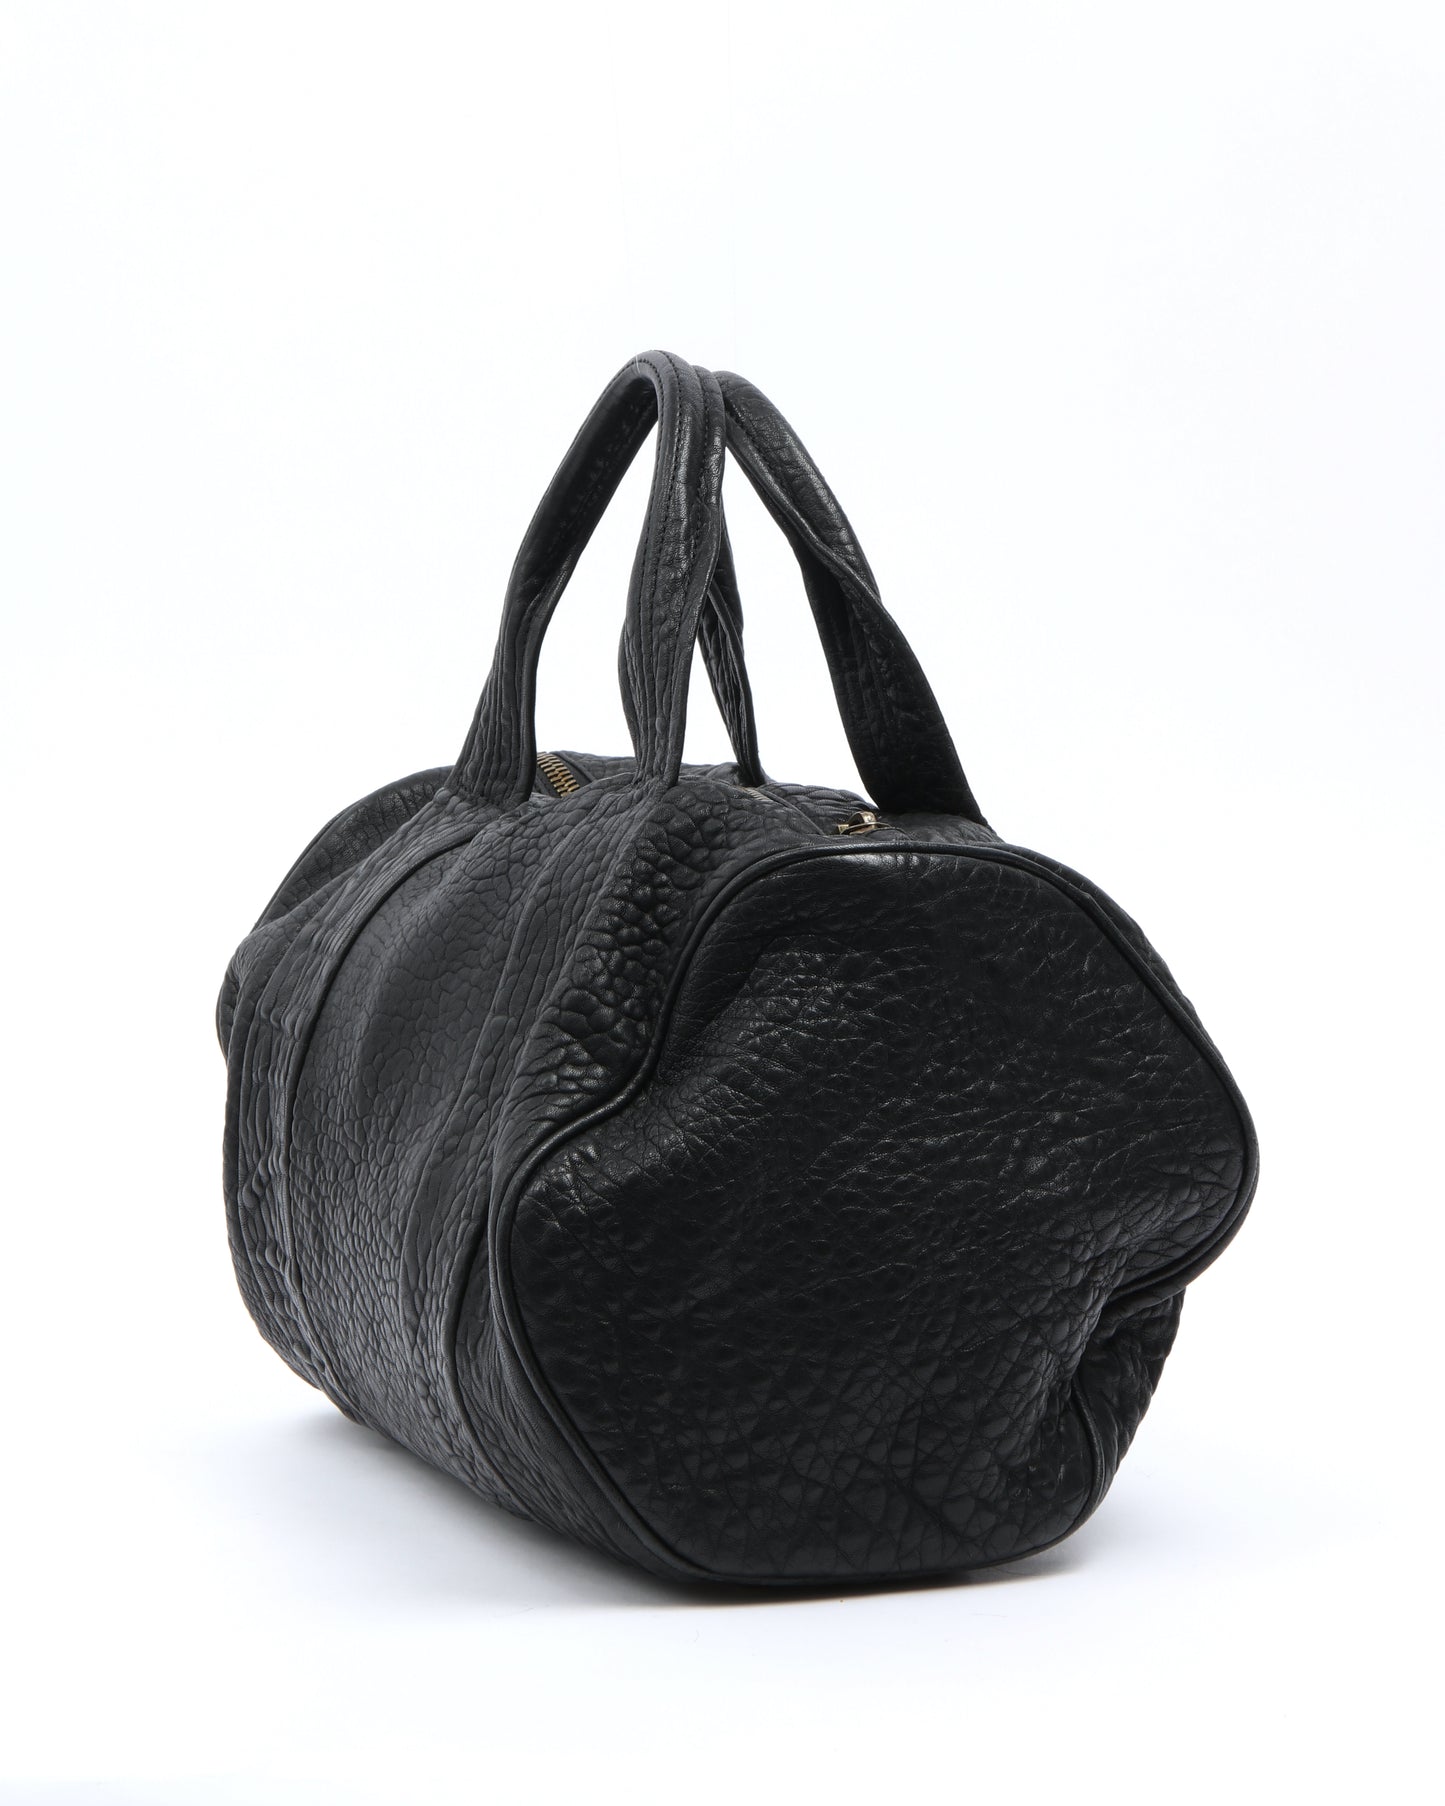 Alexander Wang Black Leather Rocco Top Handle Bag